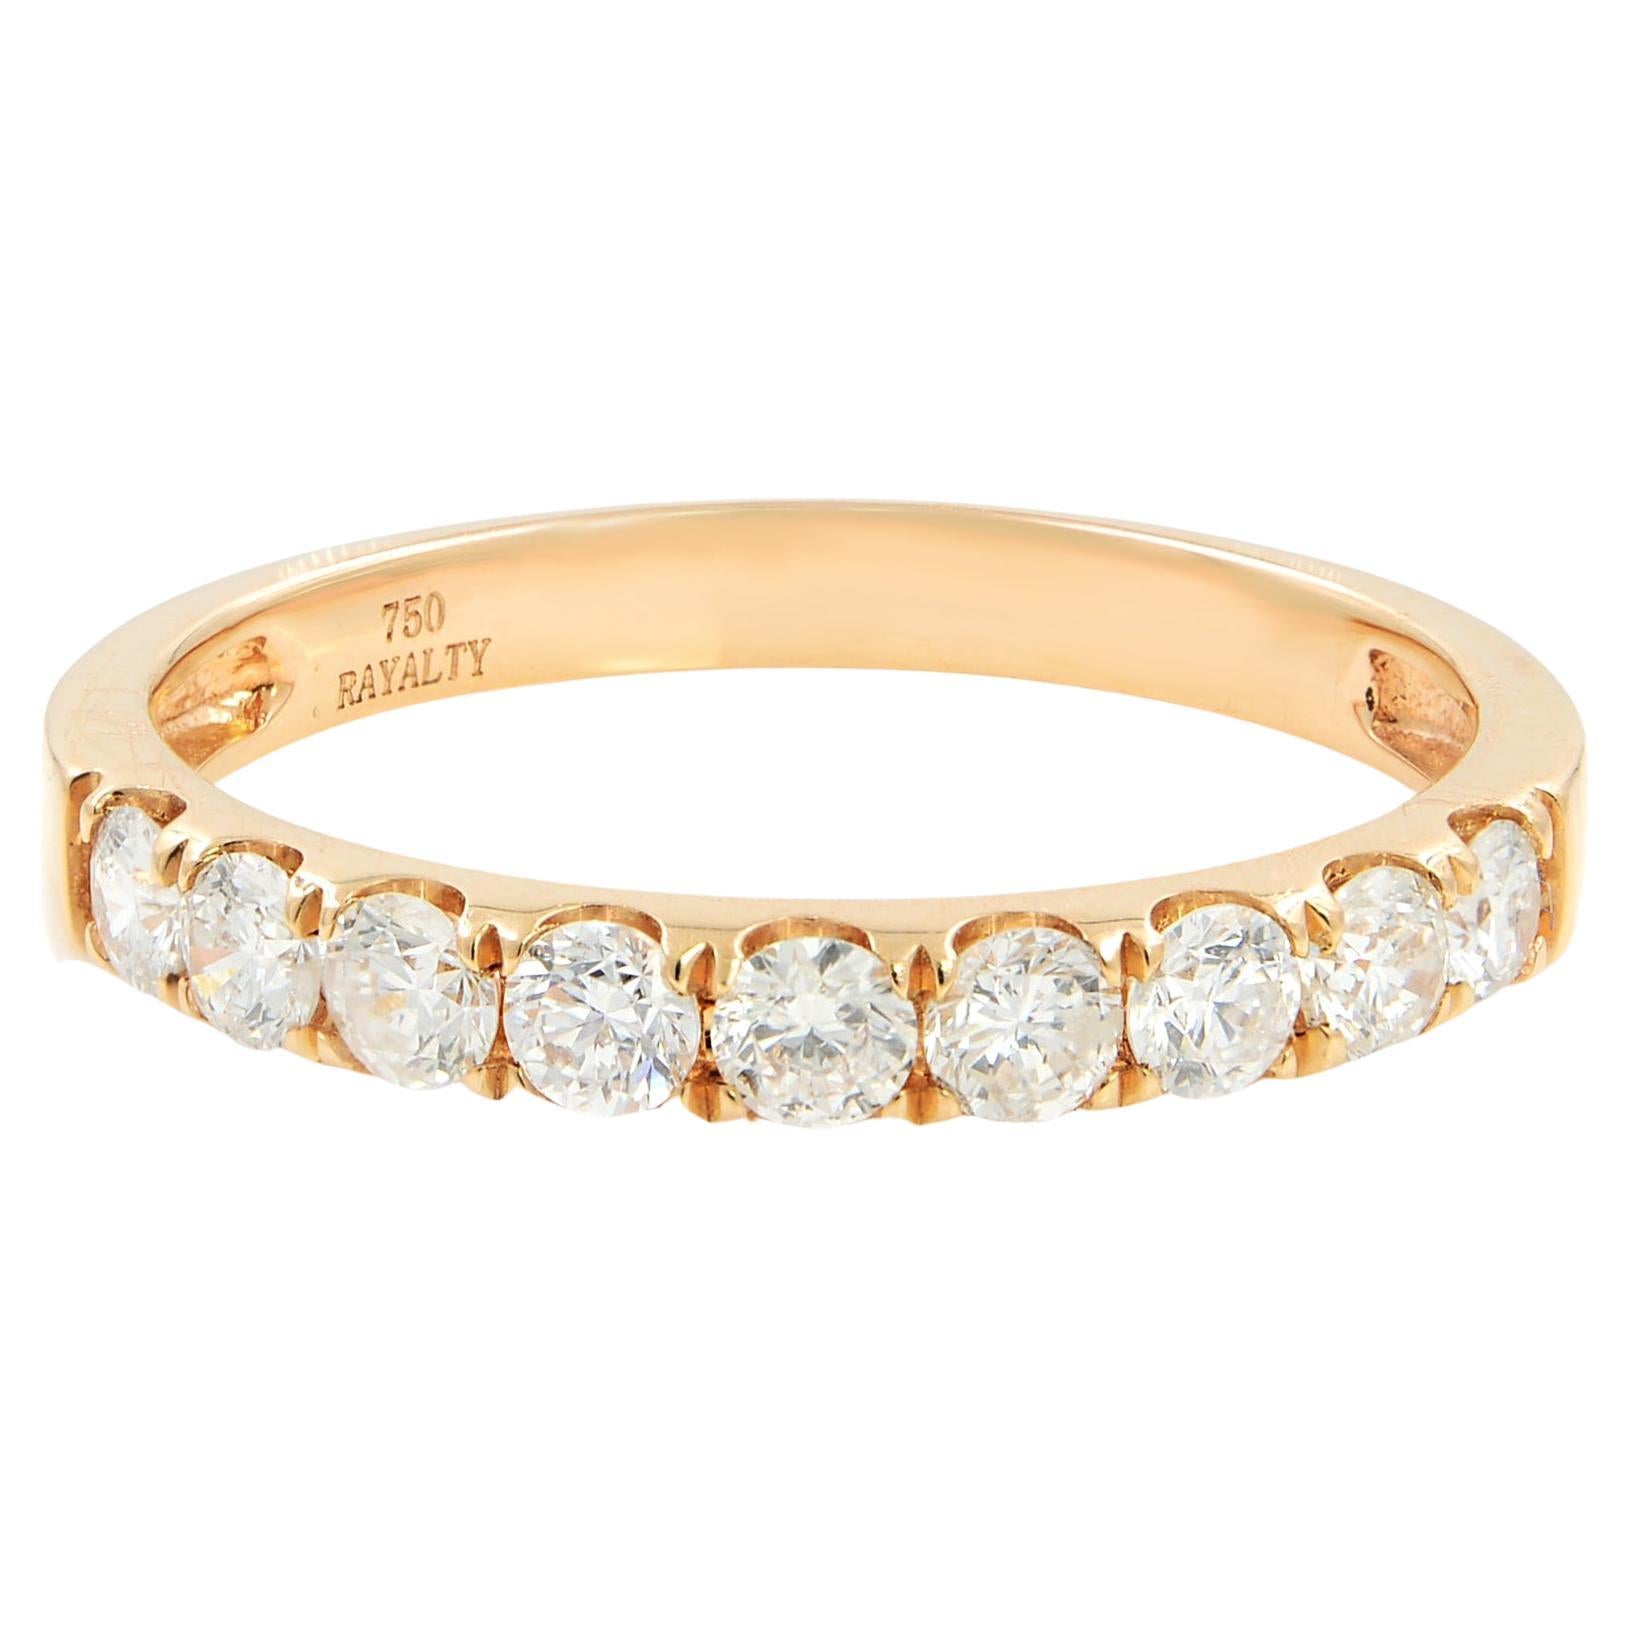 Rachel Koen Scoop Pave Diamond Wedding Band Ring 18K Rose Gold 0.53cttw For Sale